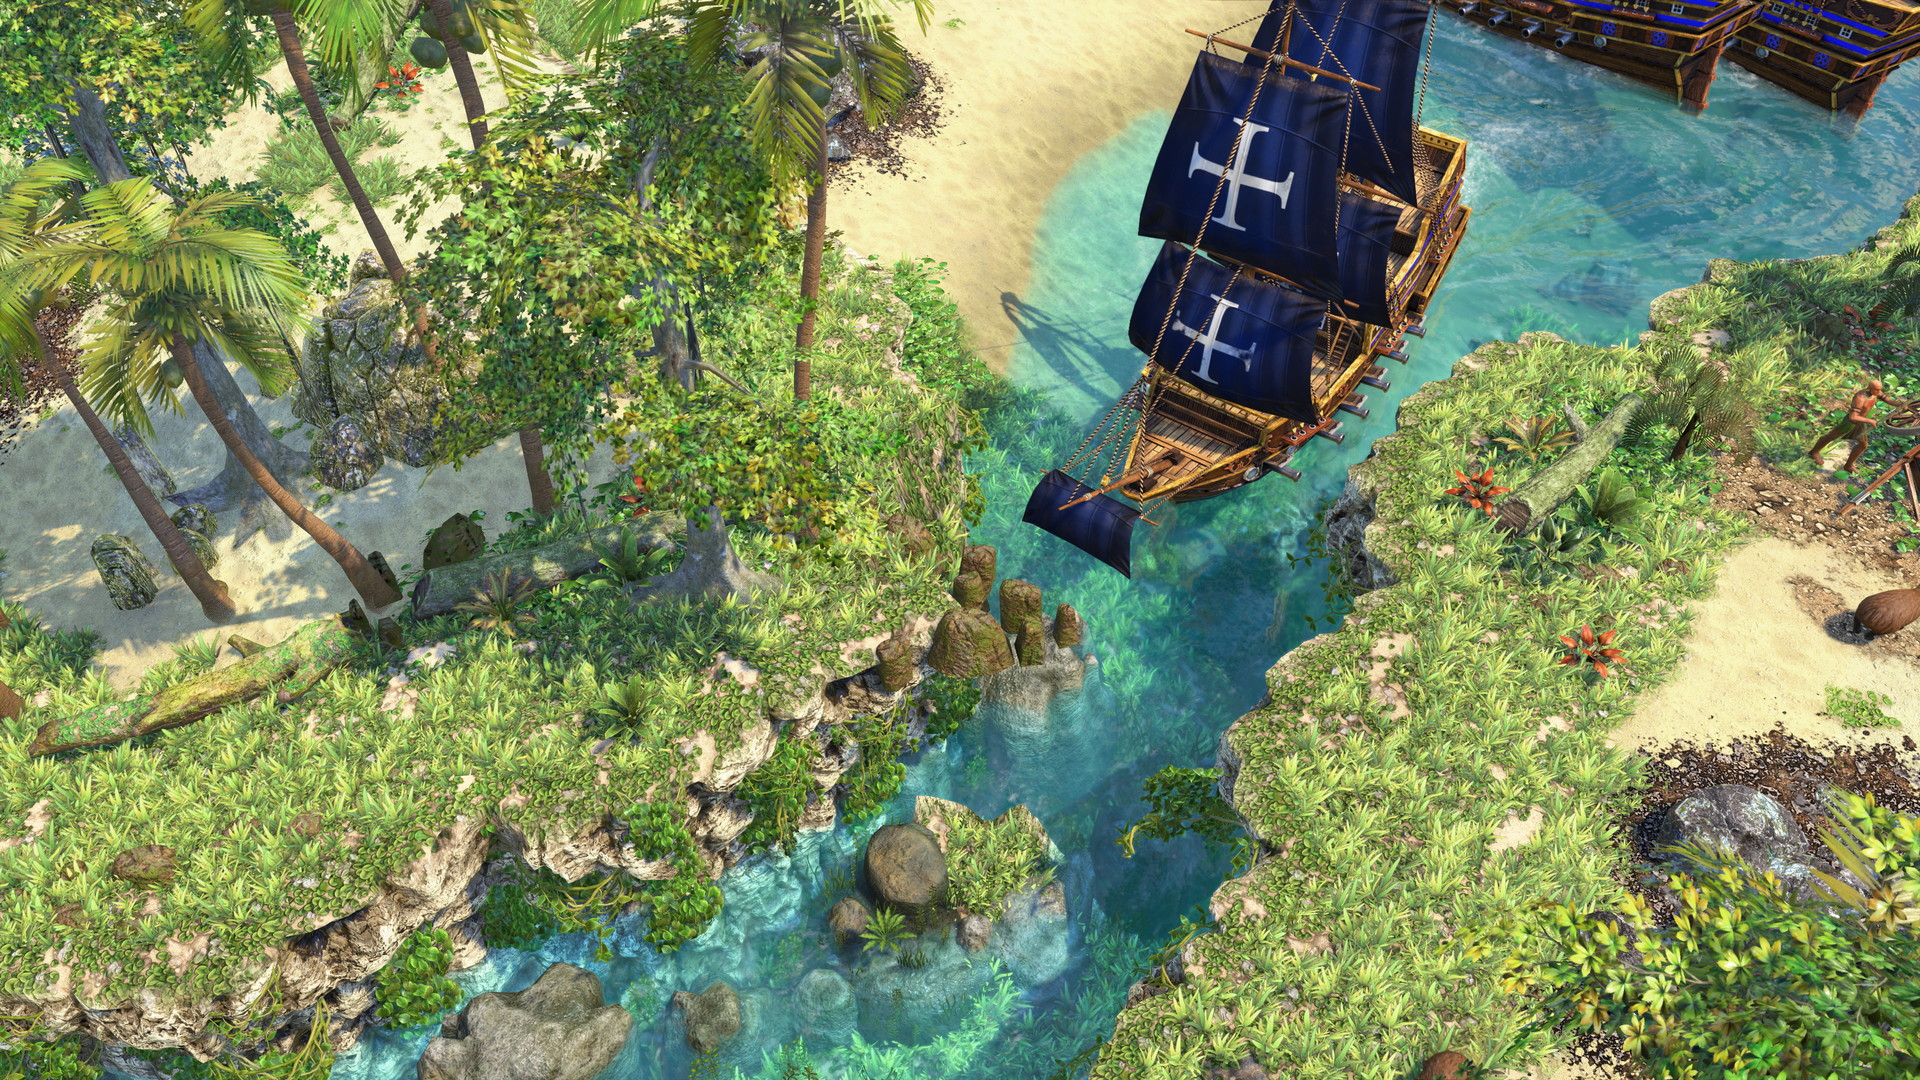 Age of Empires III: Definitive Edition - screenshot 1